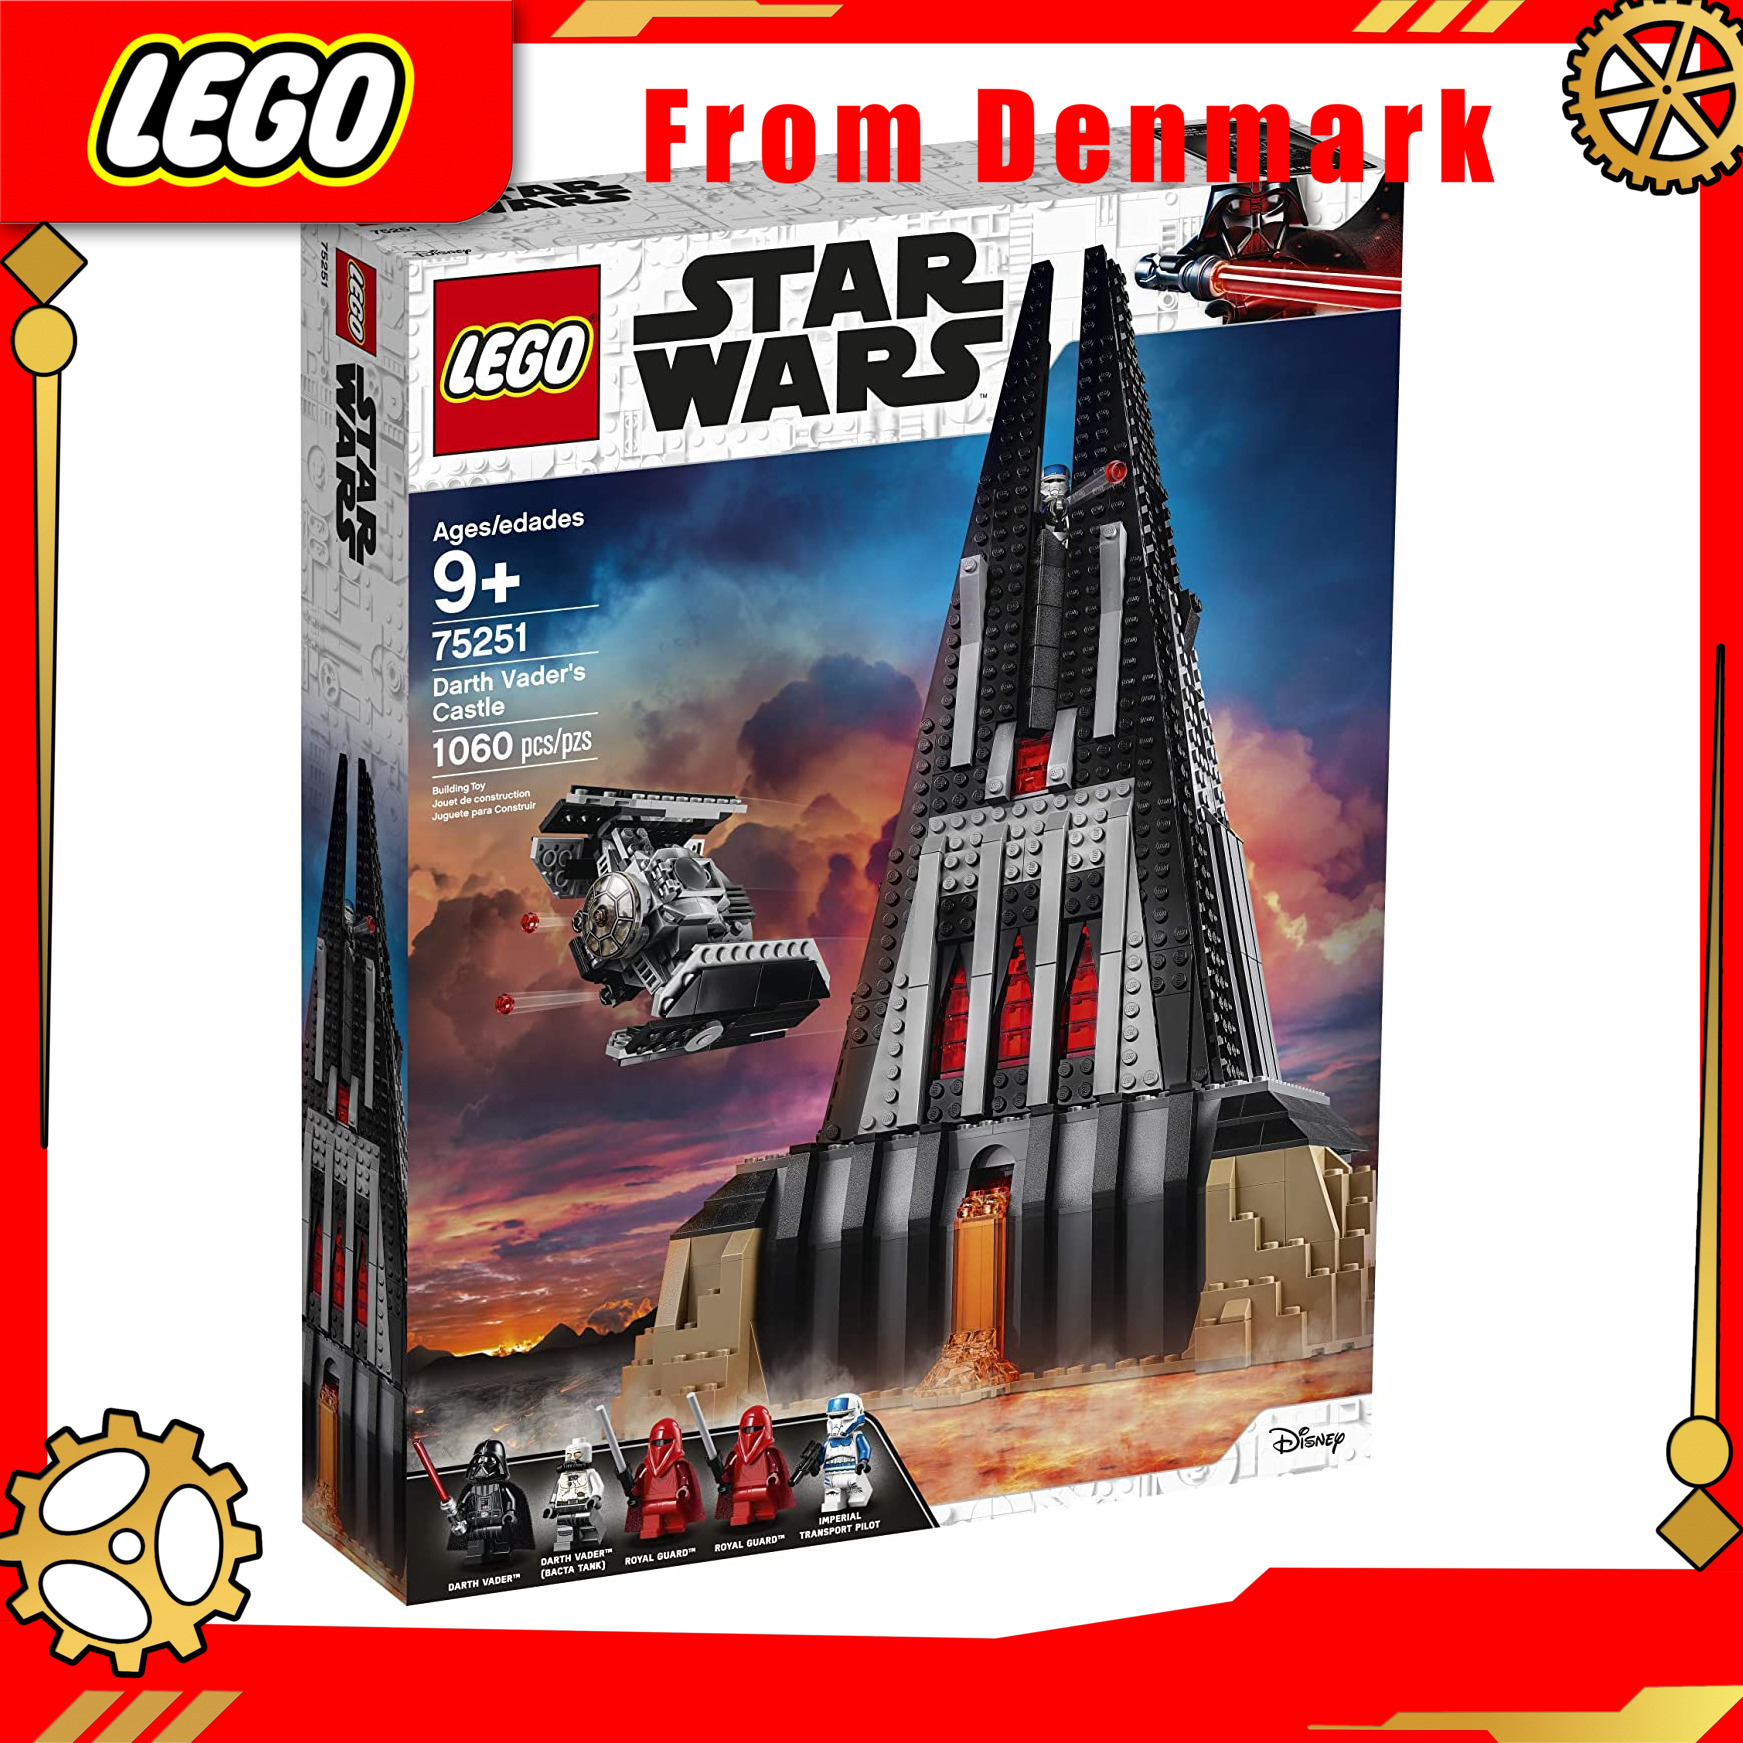 【From Denmark】LEGO Disney Star Wars Darth Vader Castle 75251 building set includes TIE Fighter Darth Vader mini figure Bacta Tank and more. (1060 pieces) genuine guarantee